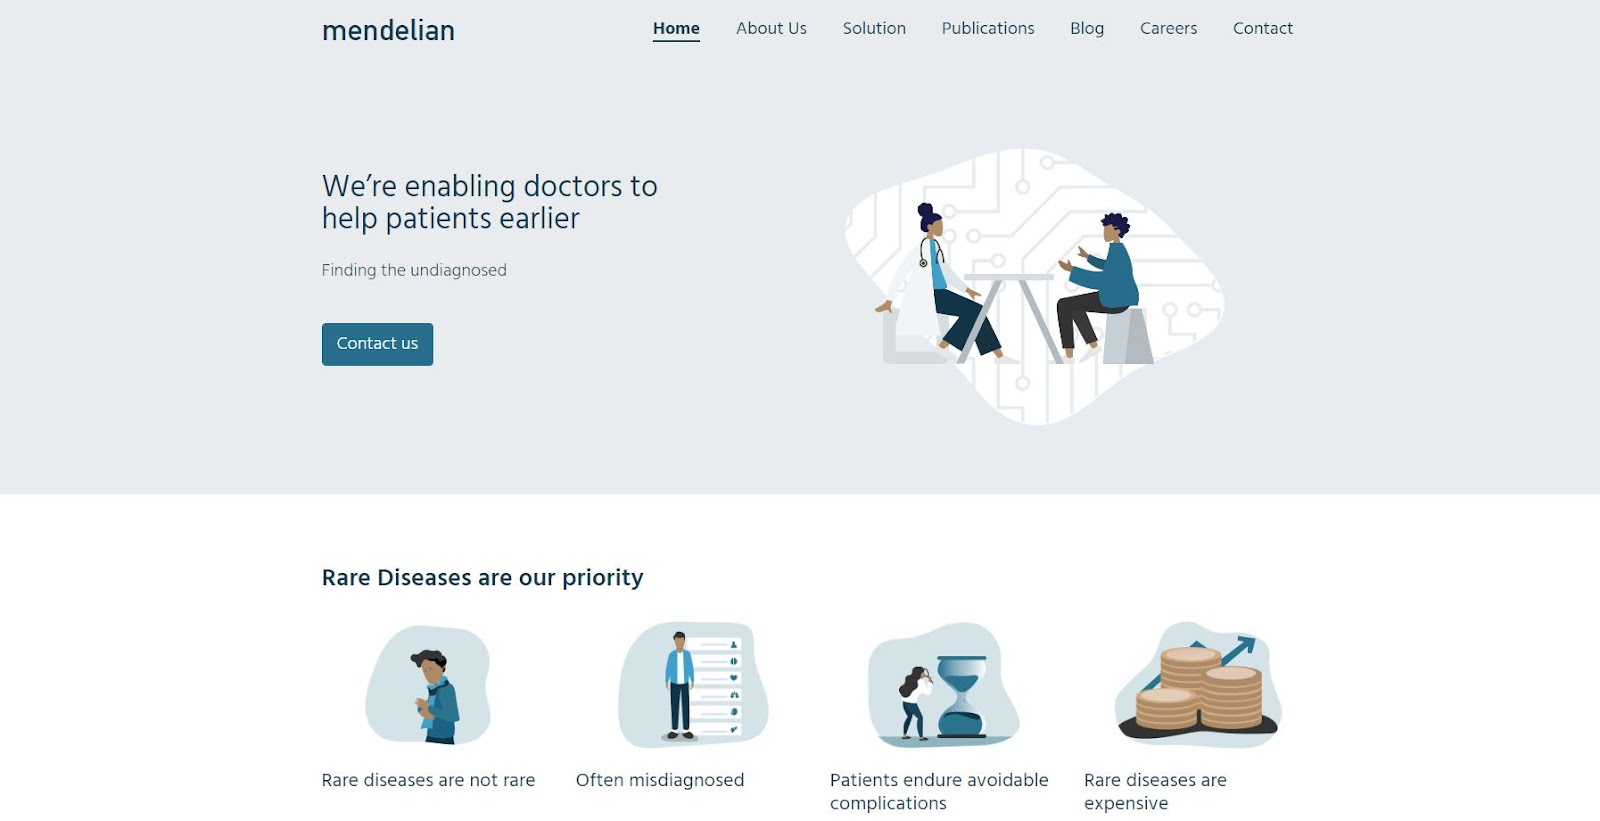 Mendelian, a London-based startup, is revolutionizing healthcare